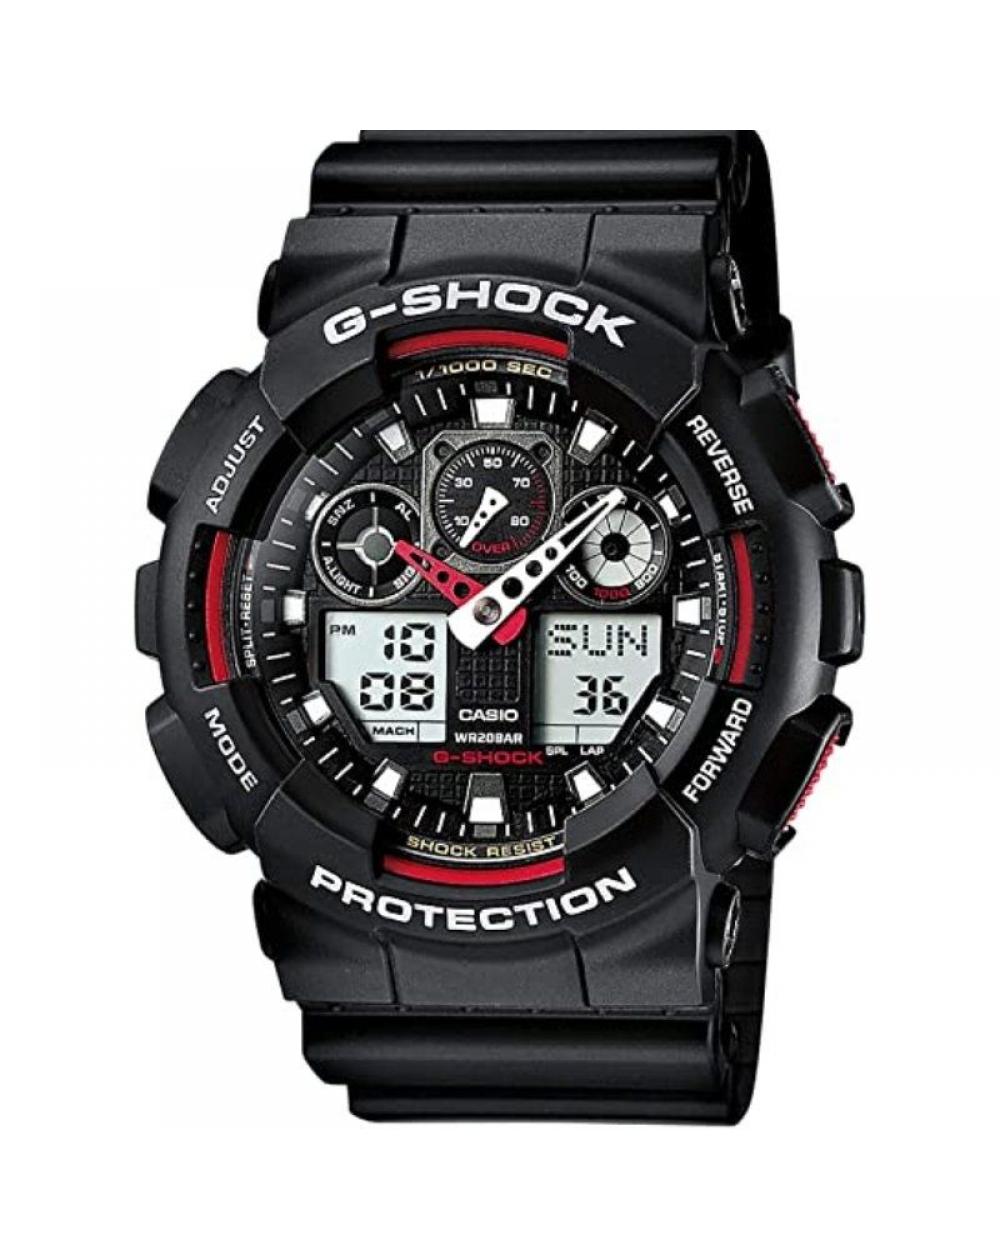 Reloj Analógico Digital Casio G-Shock Trend GA-100-1A4ER/ 55mm/ Negro y Rojo - Imagen 1